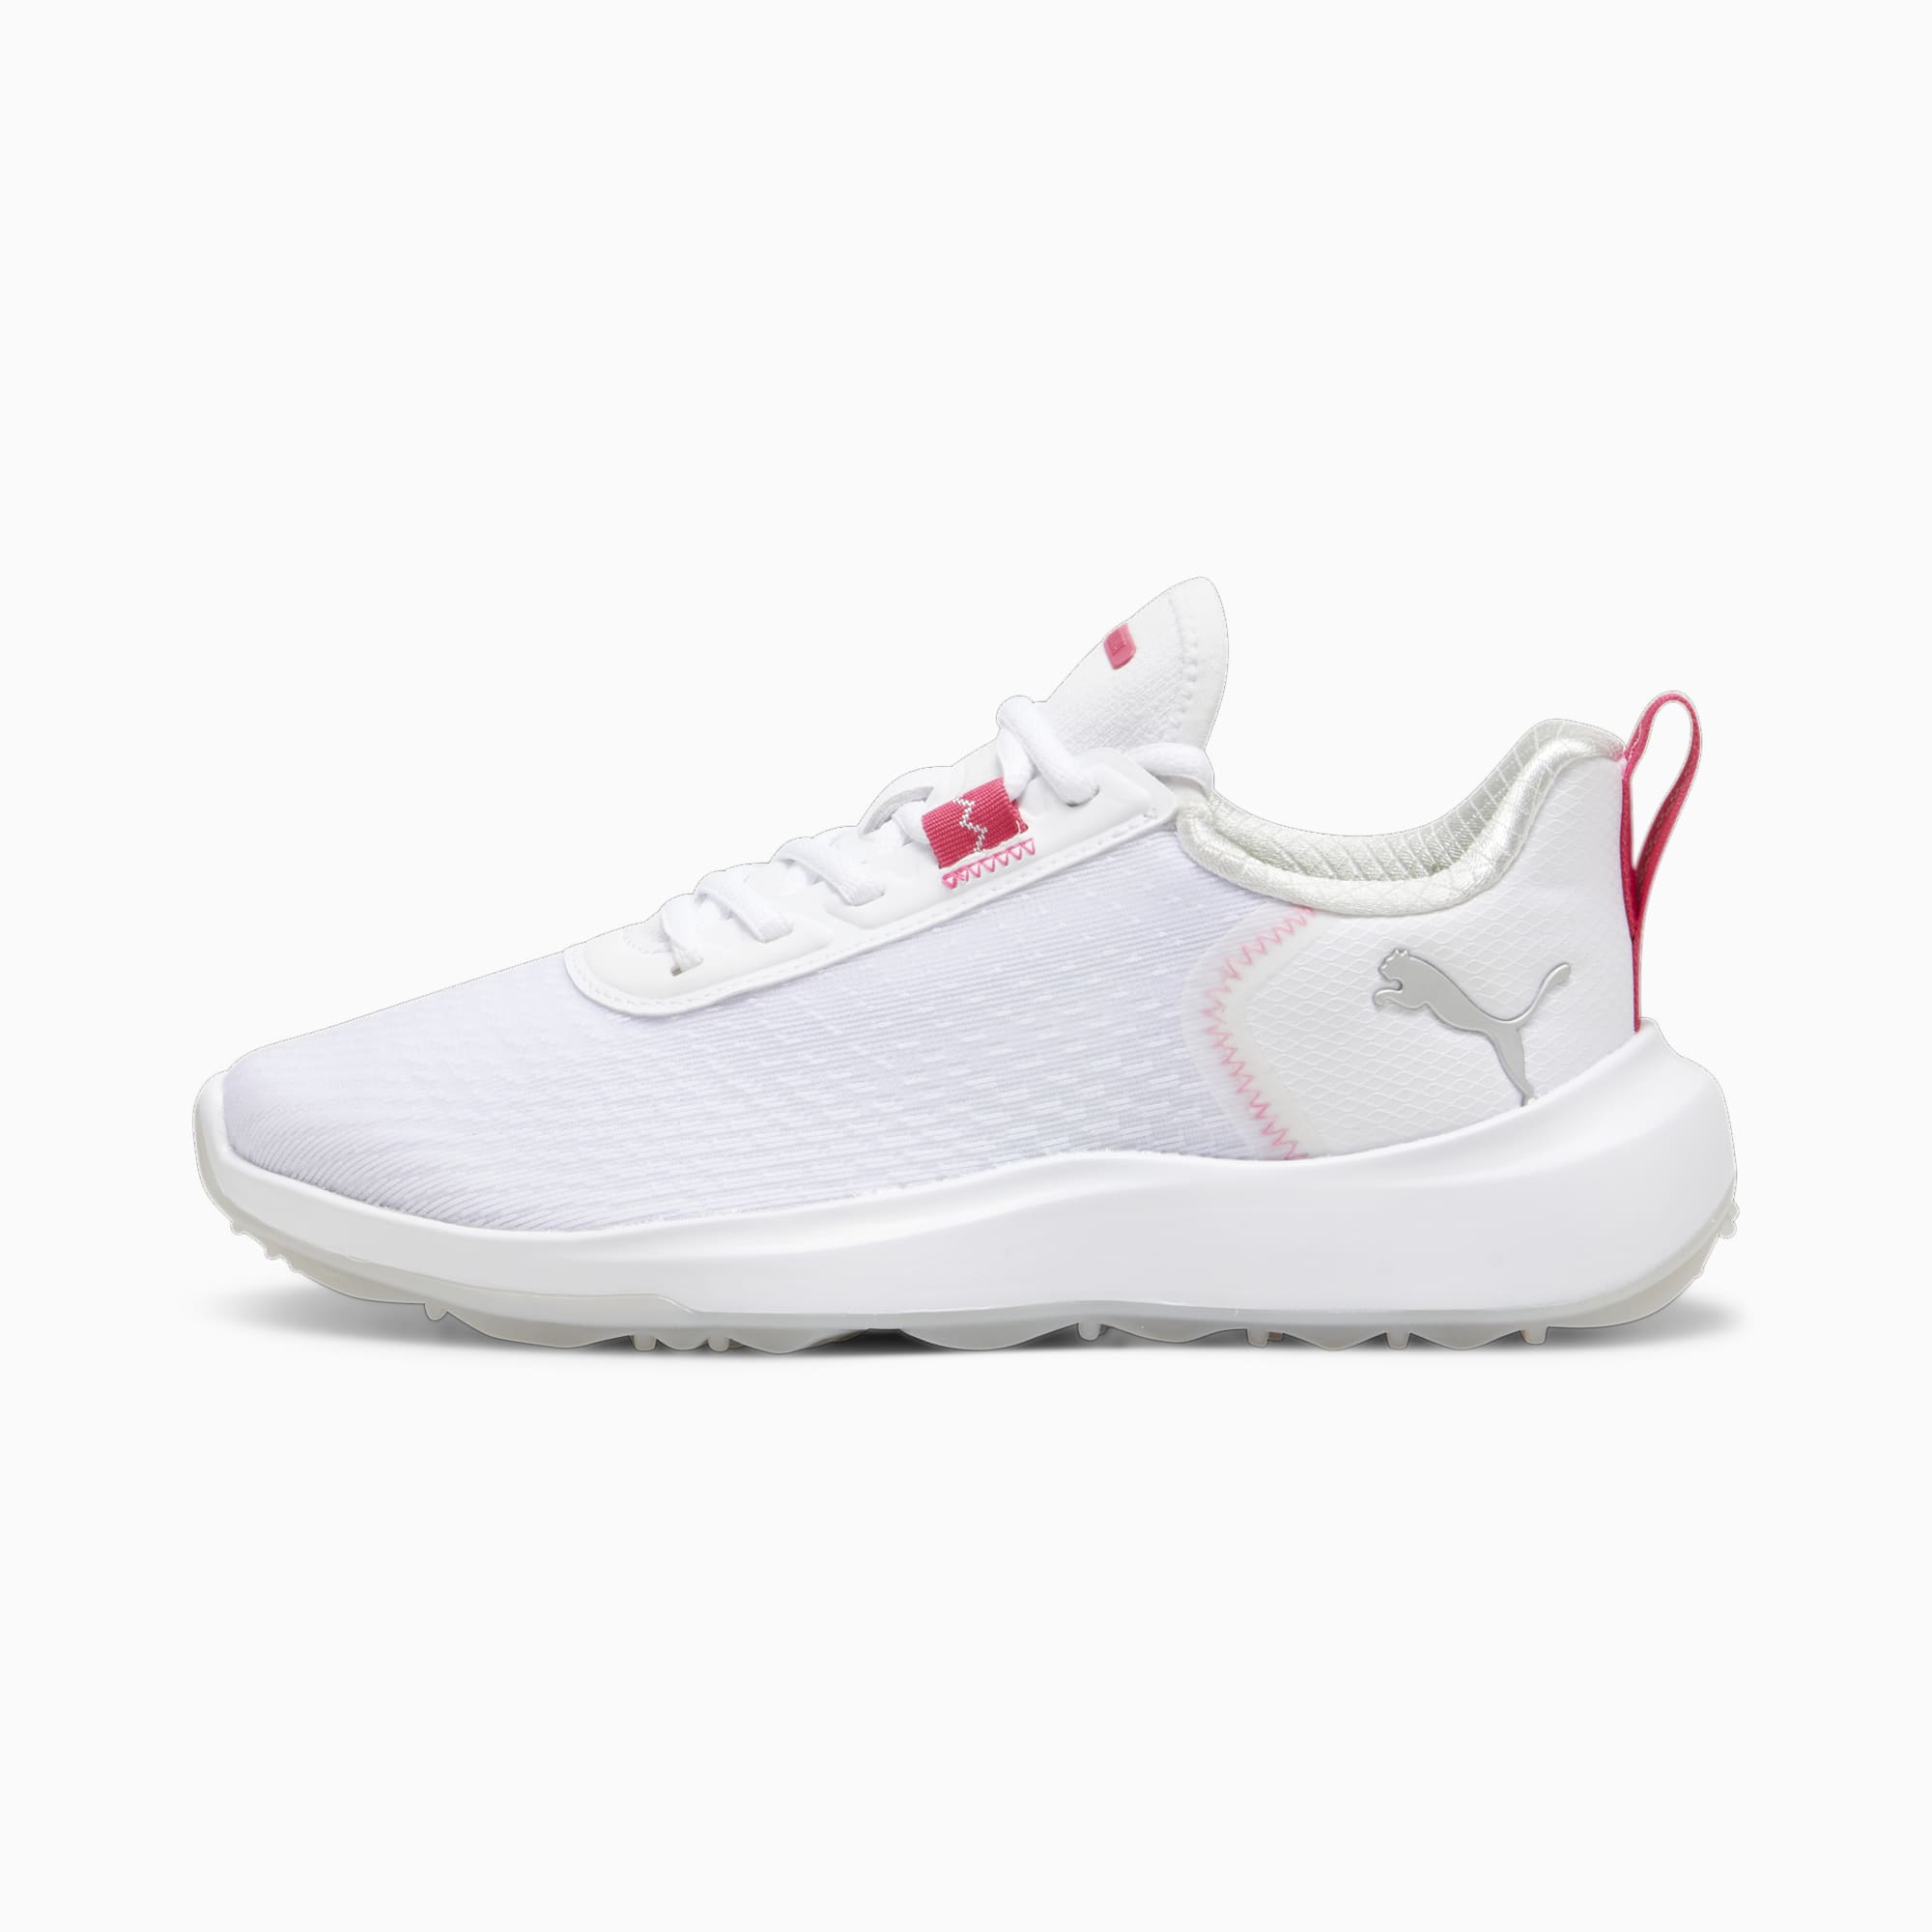 puma chaussures de golf fusion crush sport femme, blanc/rose